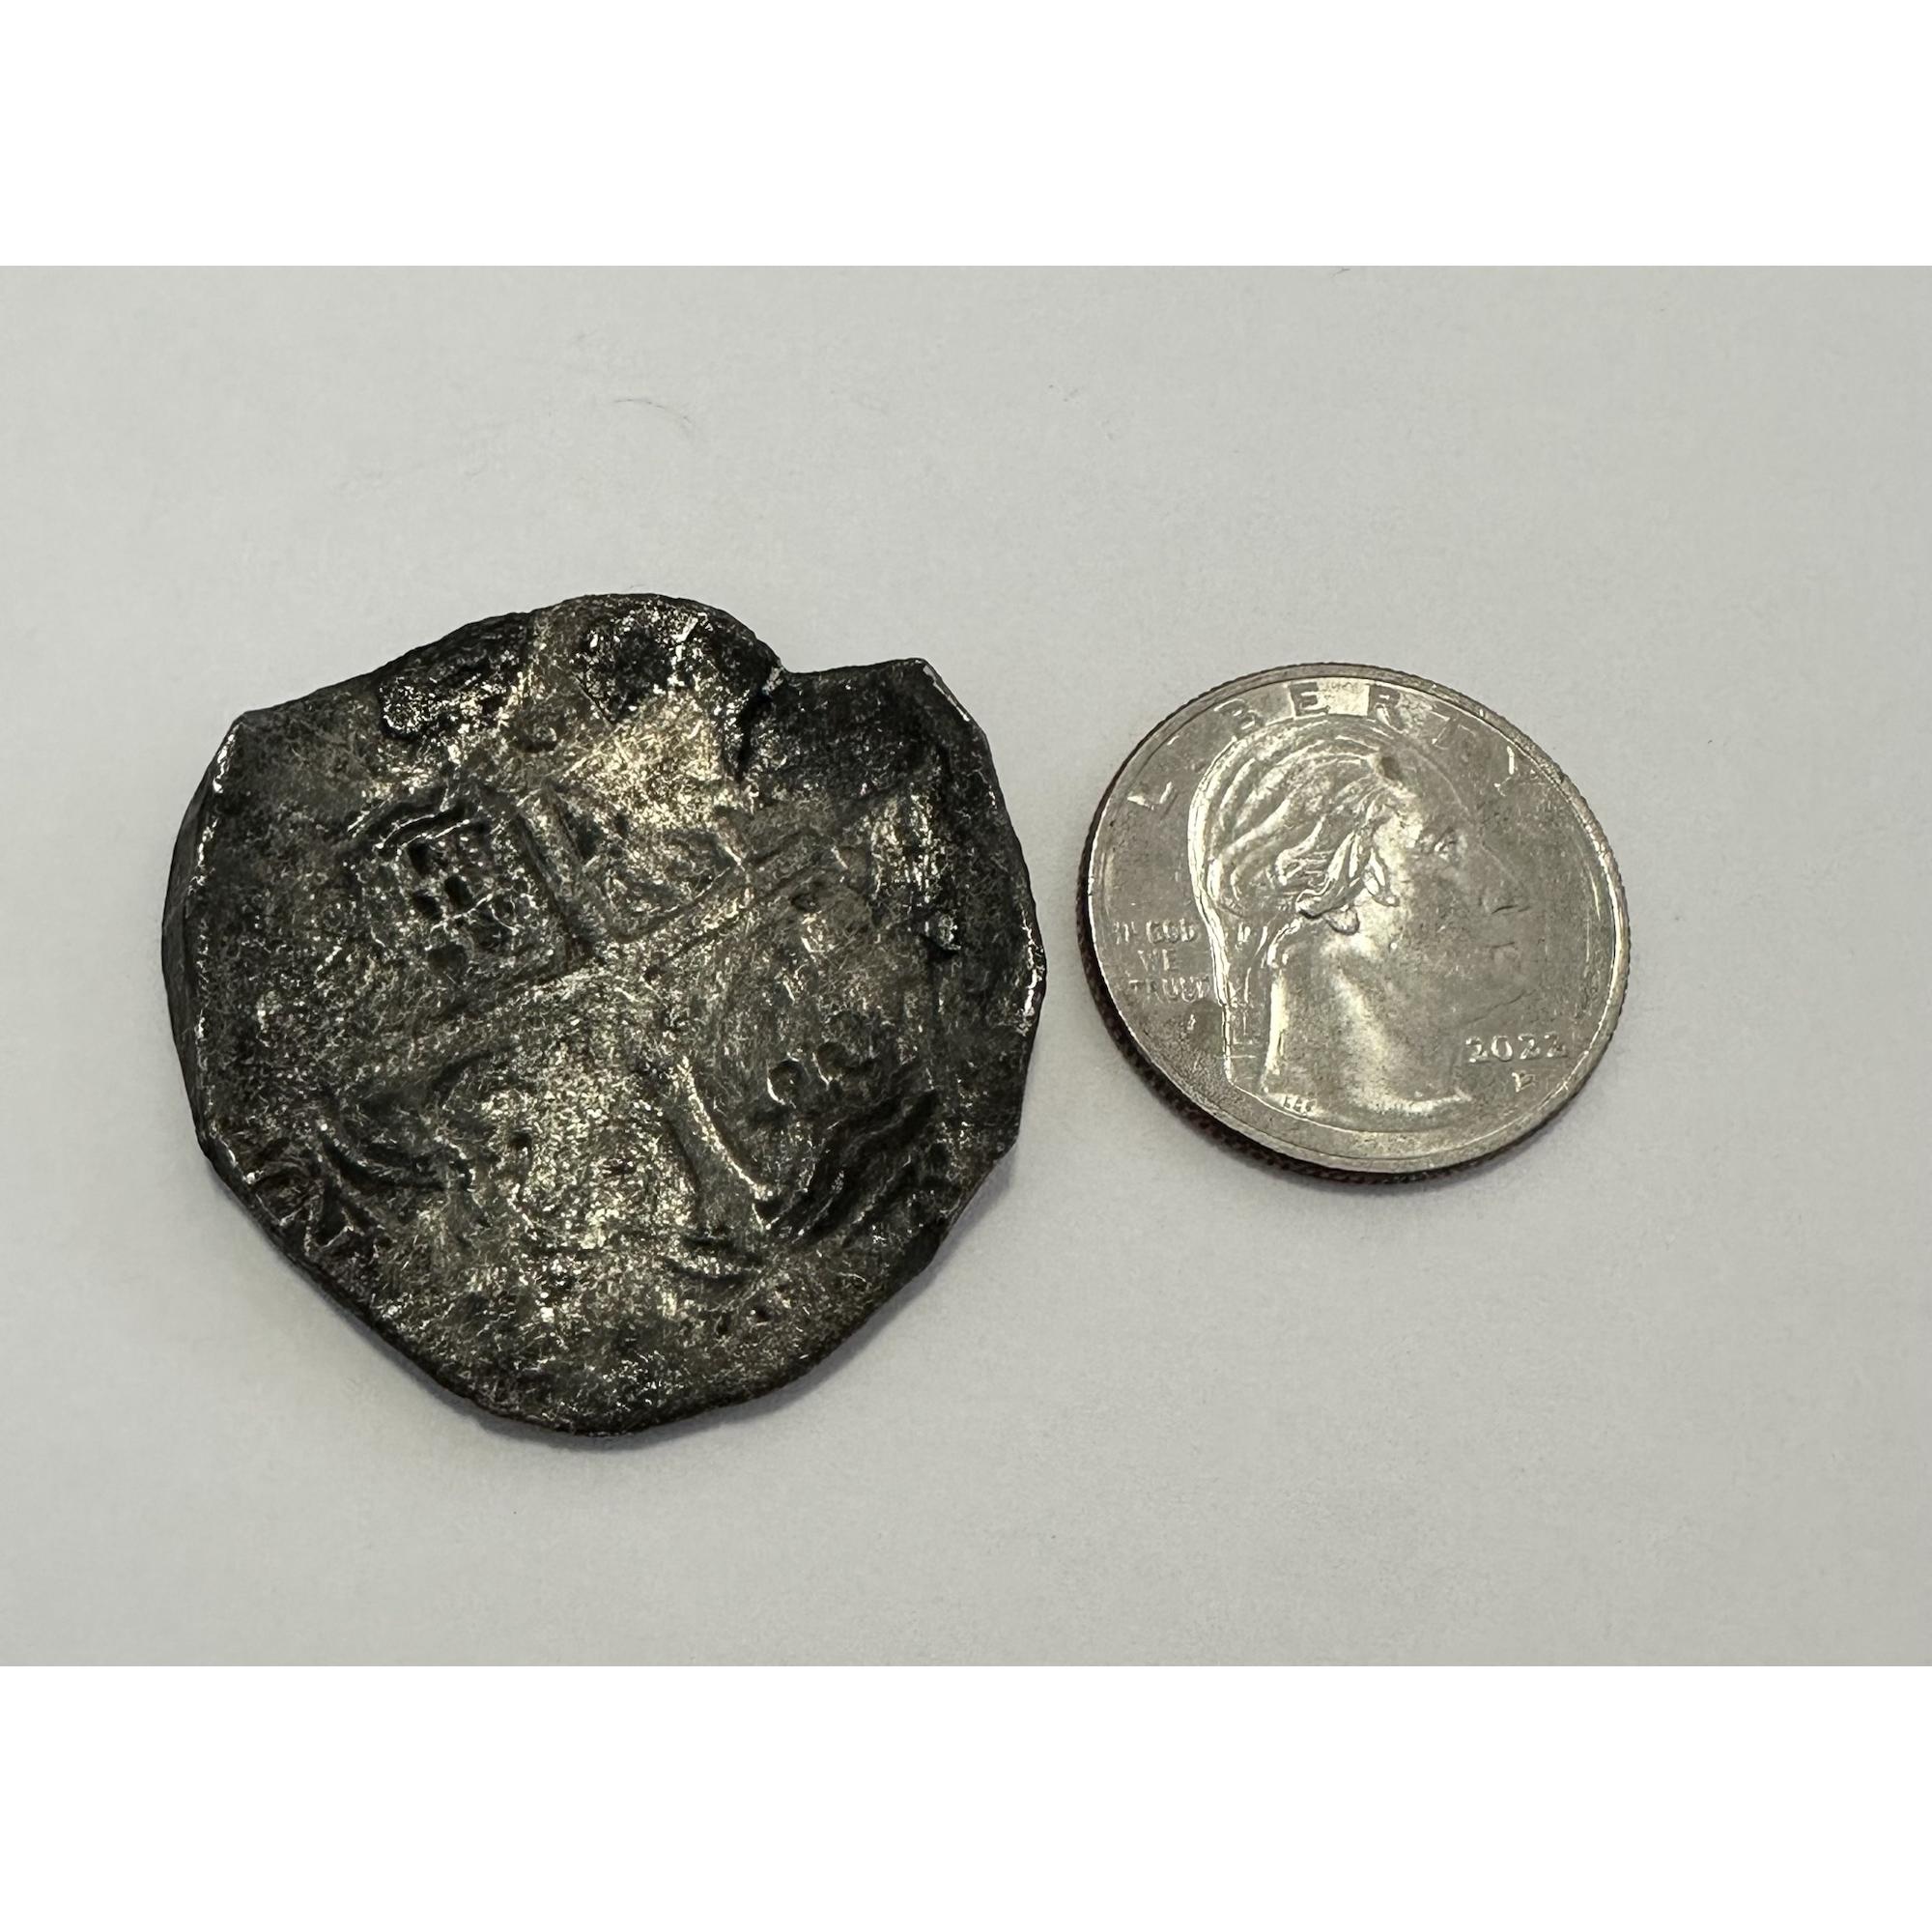 Concepcion 8 reale choice grade shipwreck coin from 1641